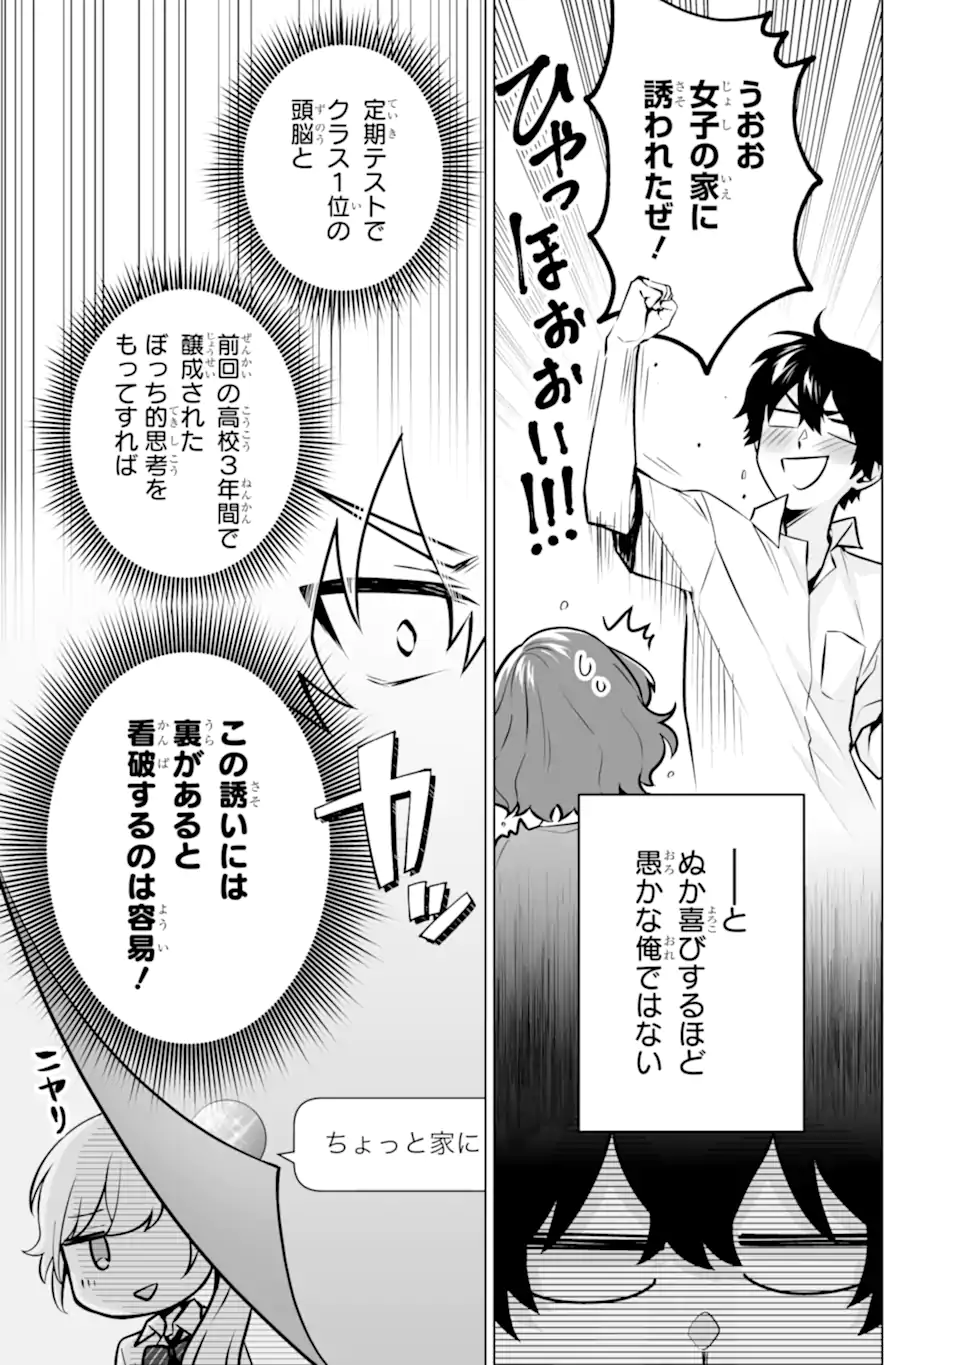 Dou ka Ore wo Hanatte Oitekure - Chapter 19.1 - Page 3